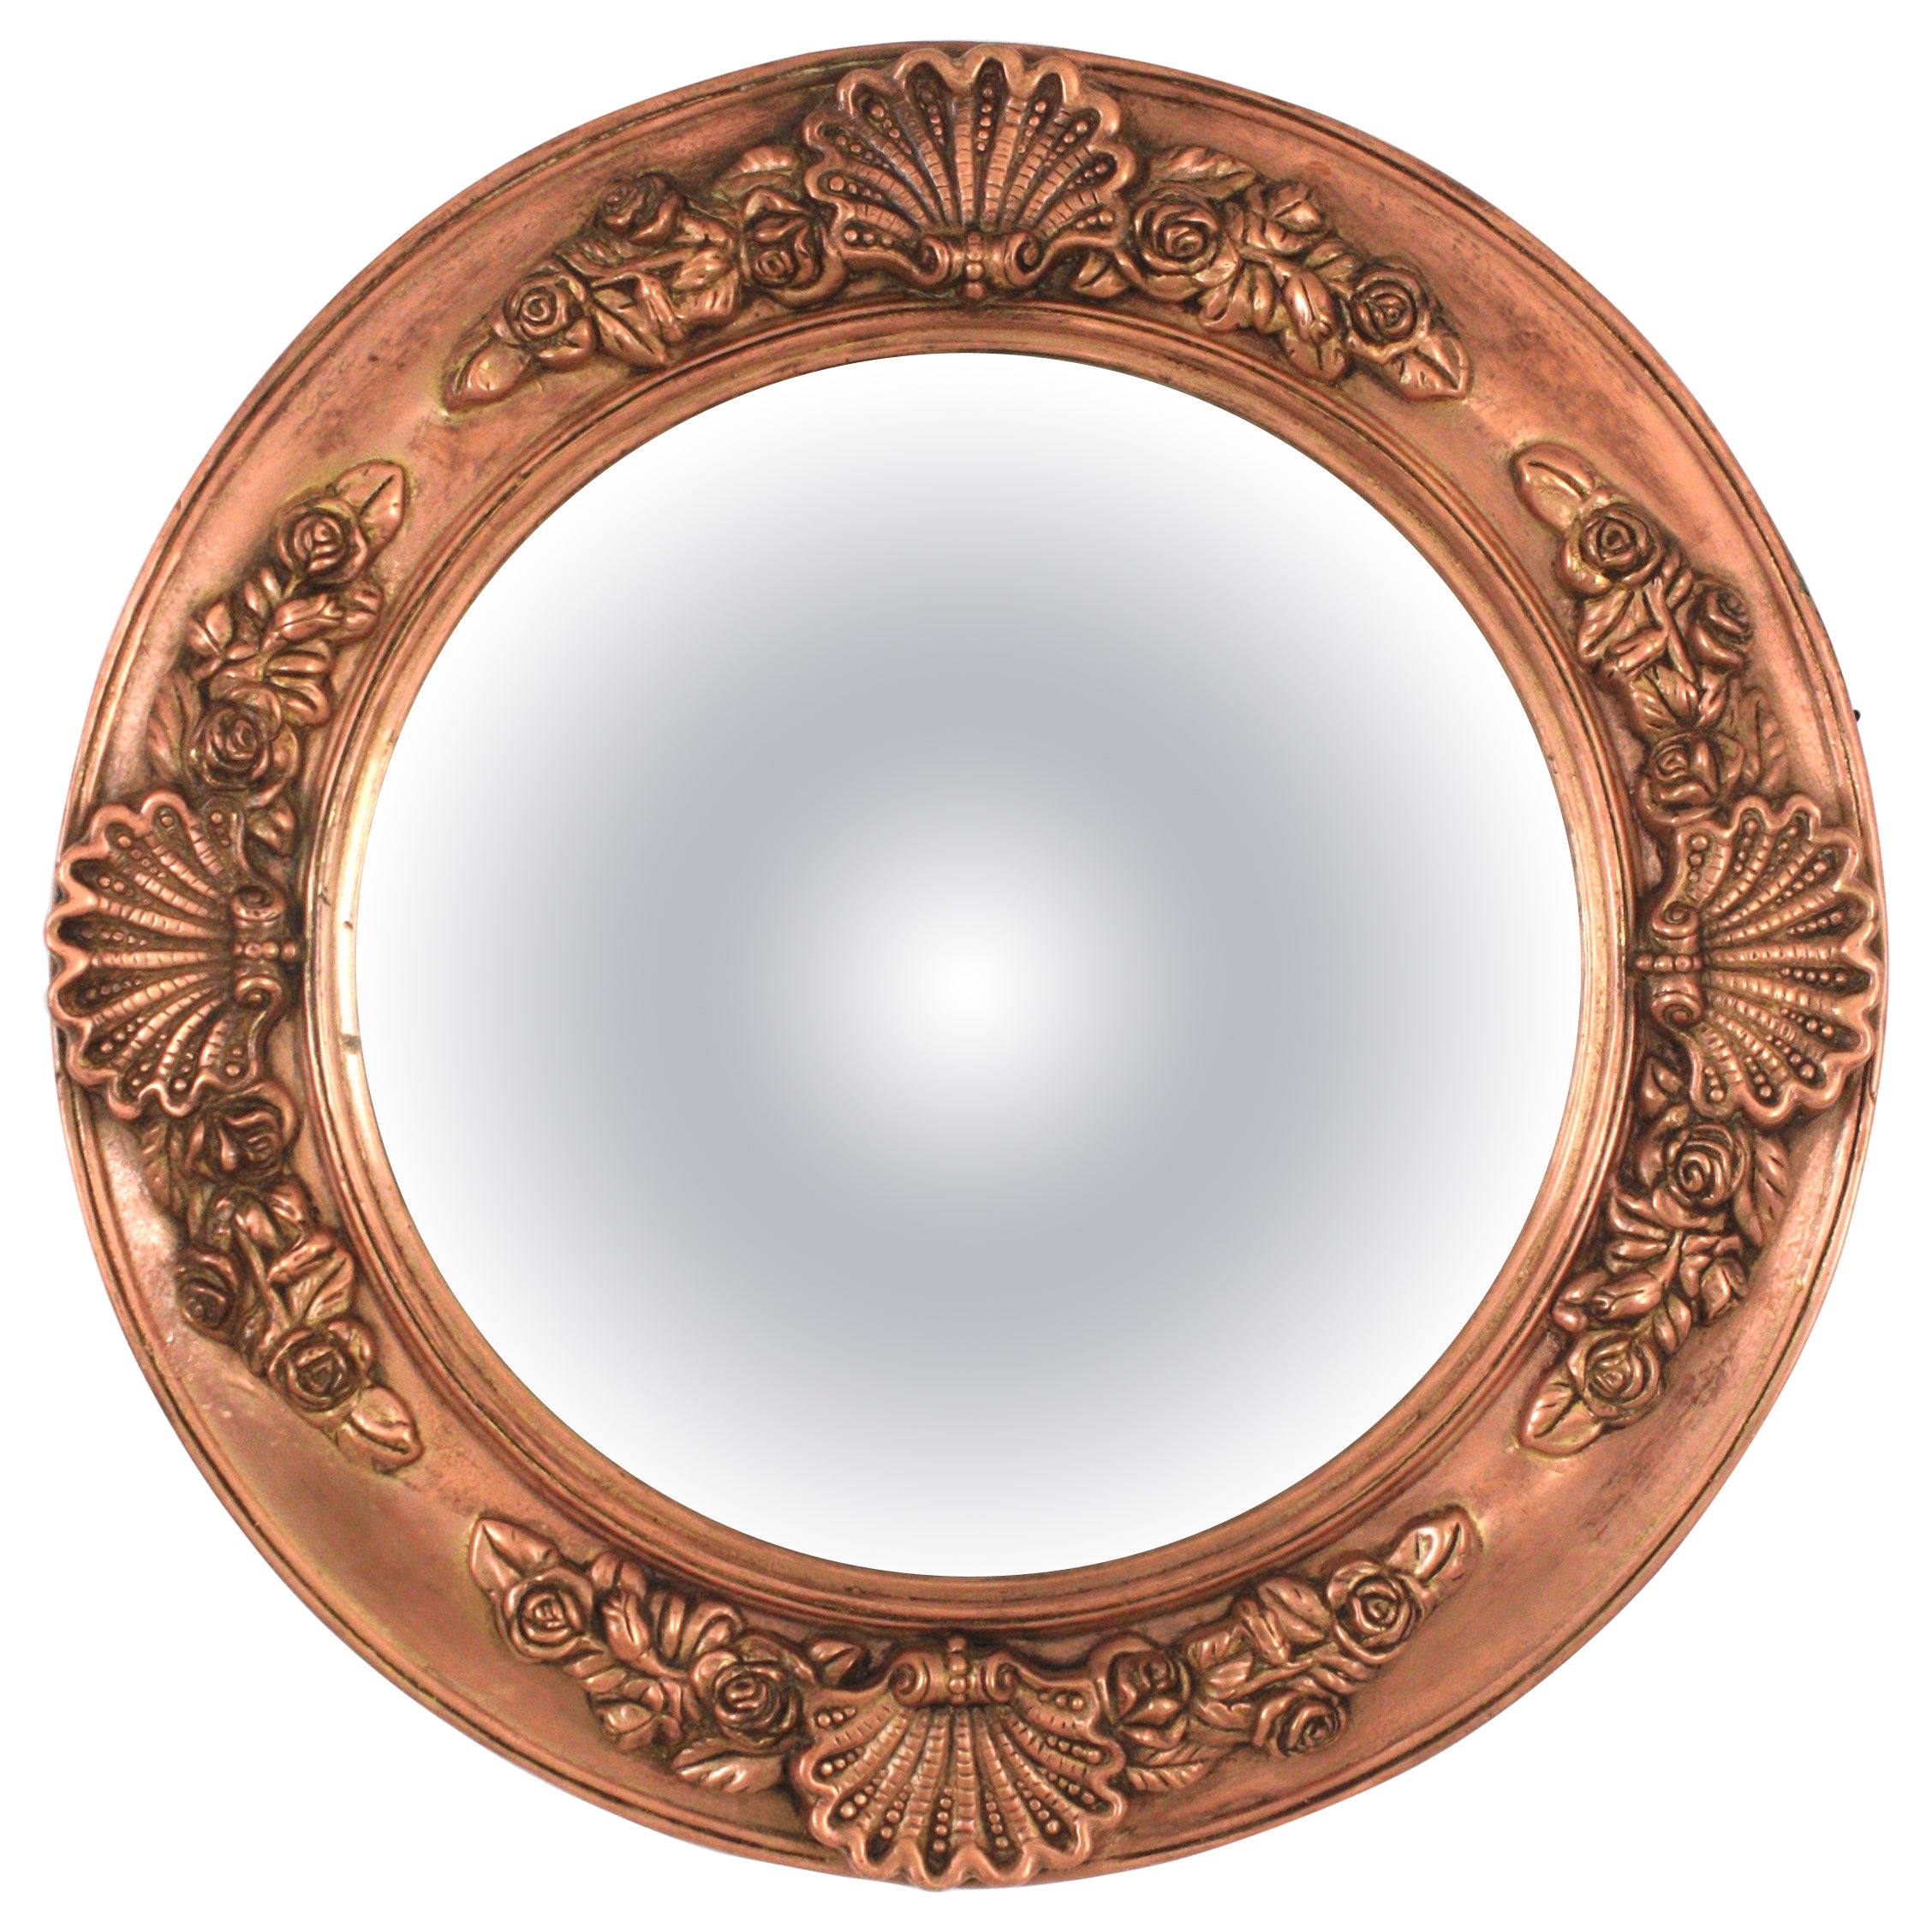 What is a bullseye mirror?